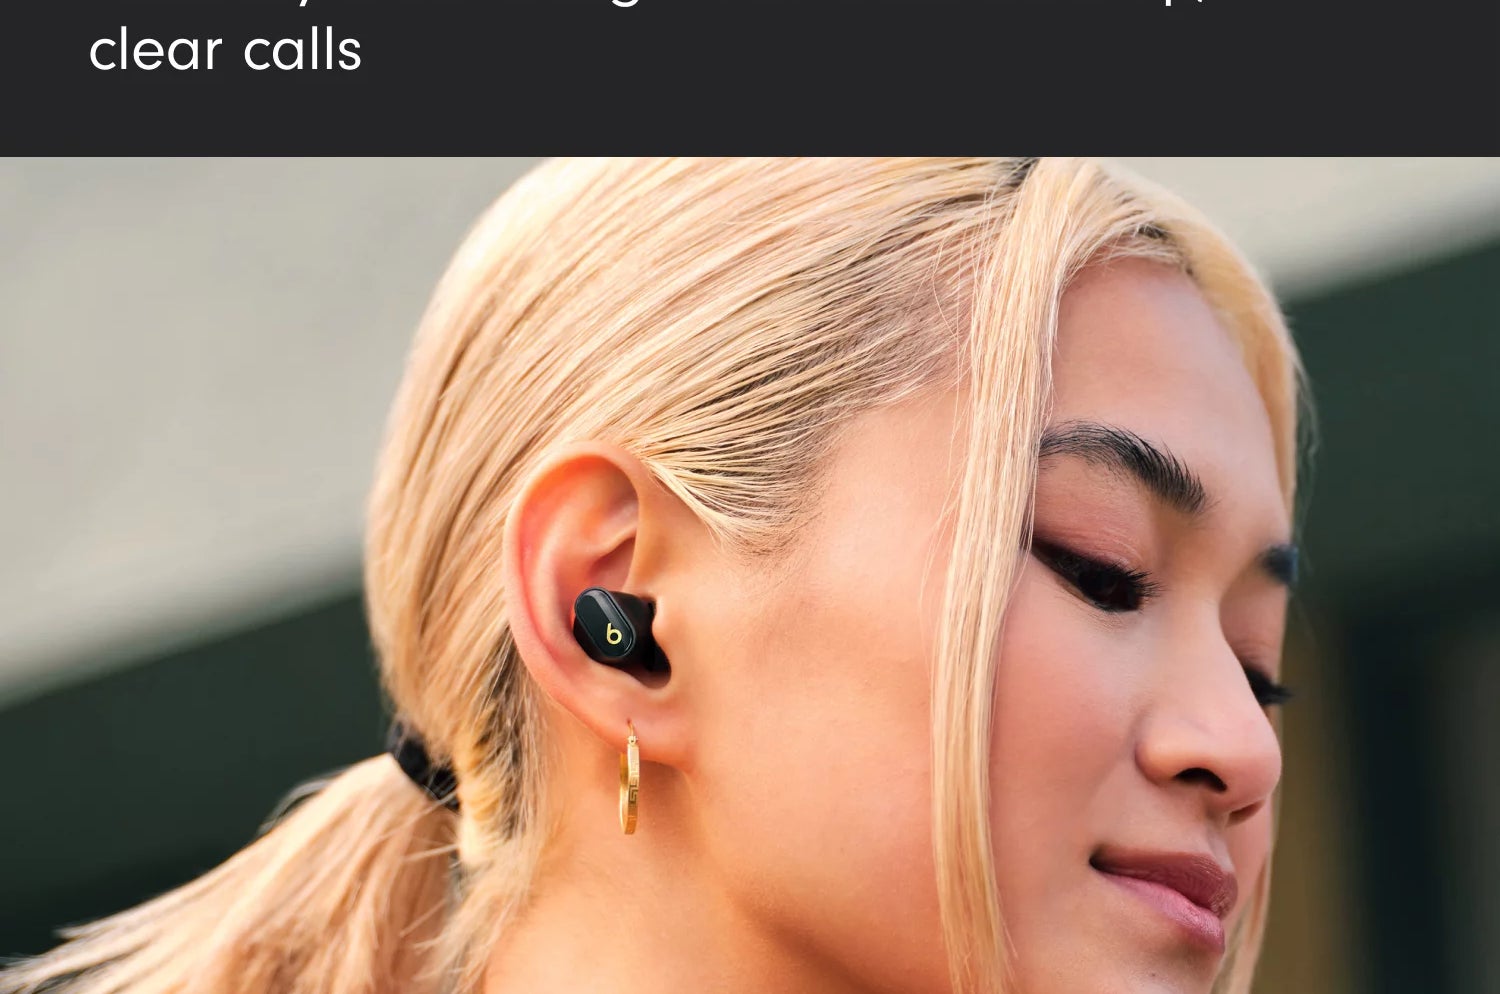 a model wearing the earbuds in black